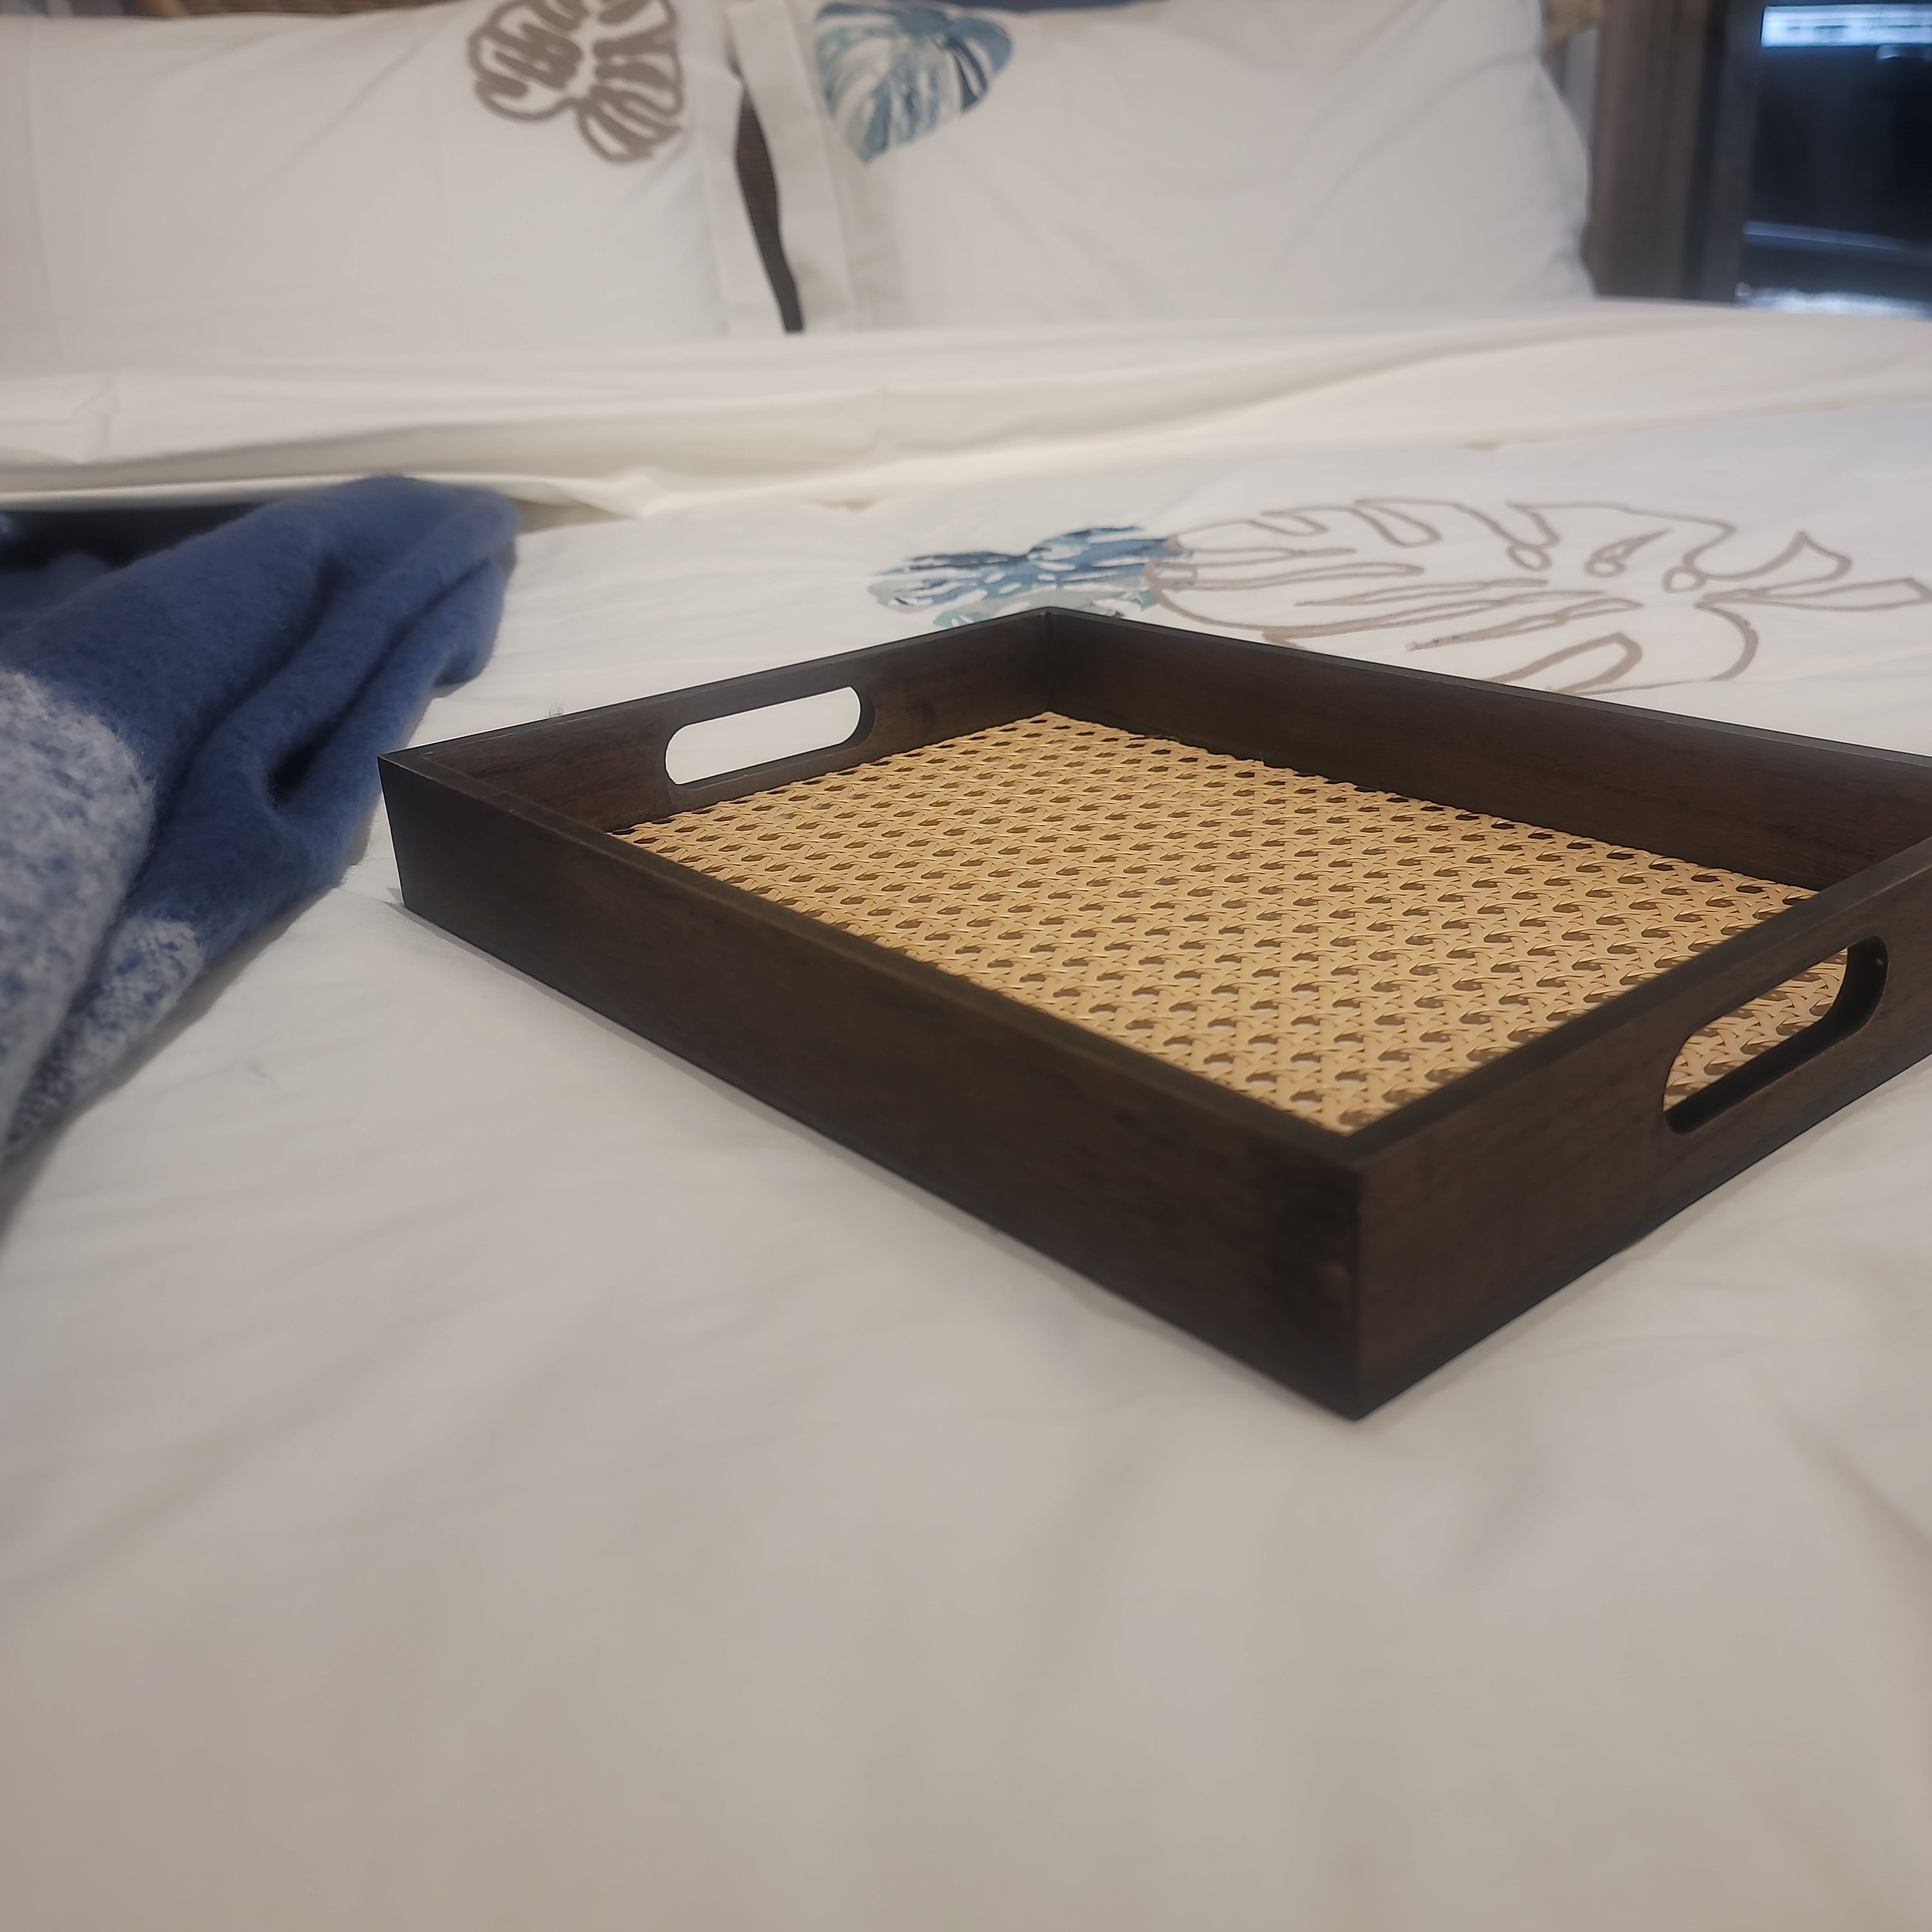 Multipurpose wooden tray